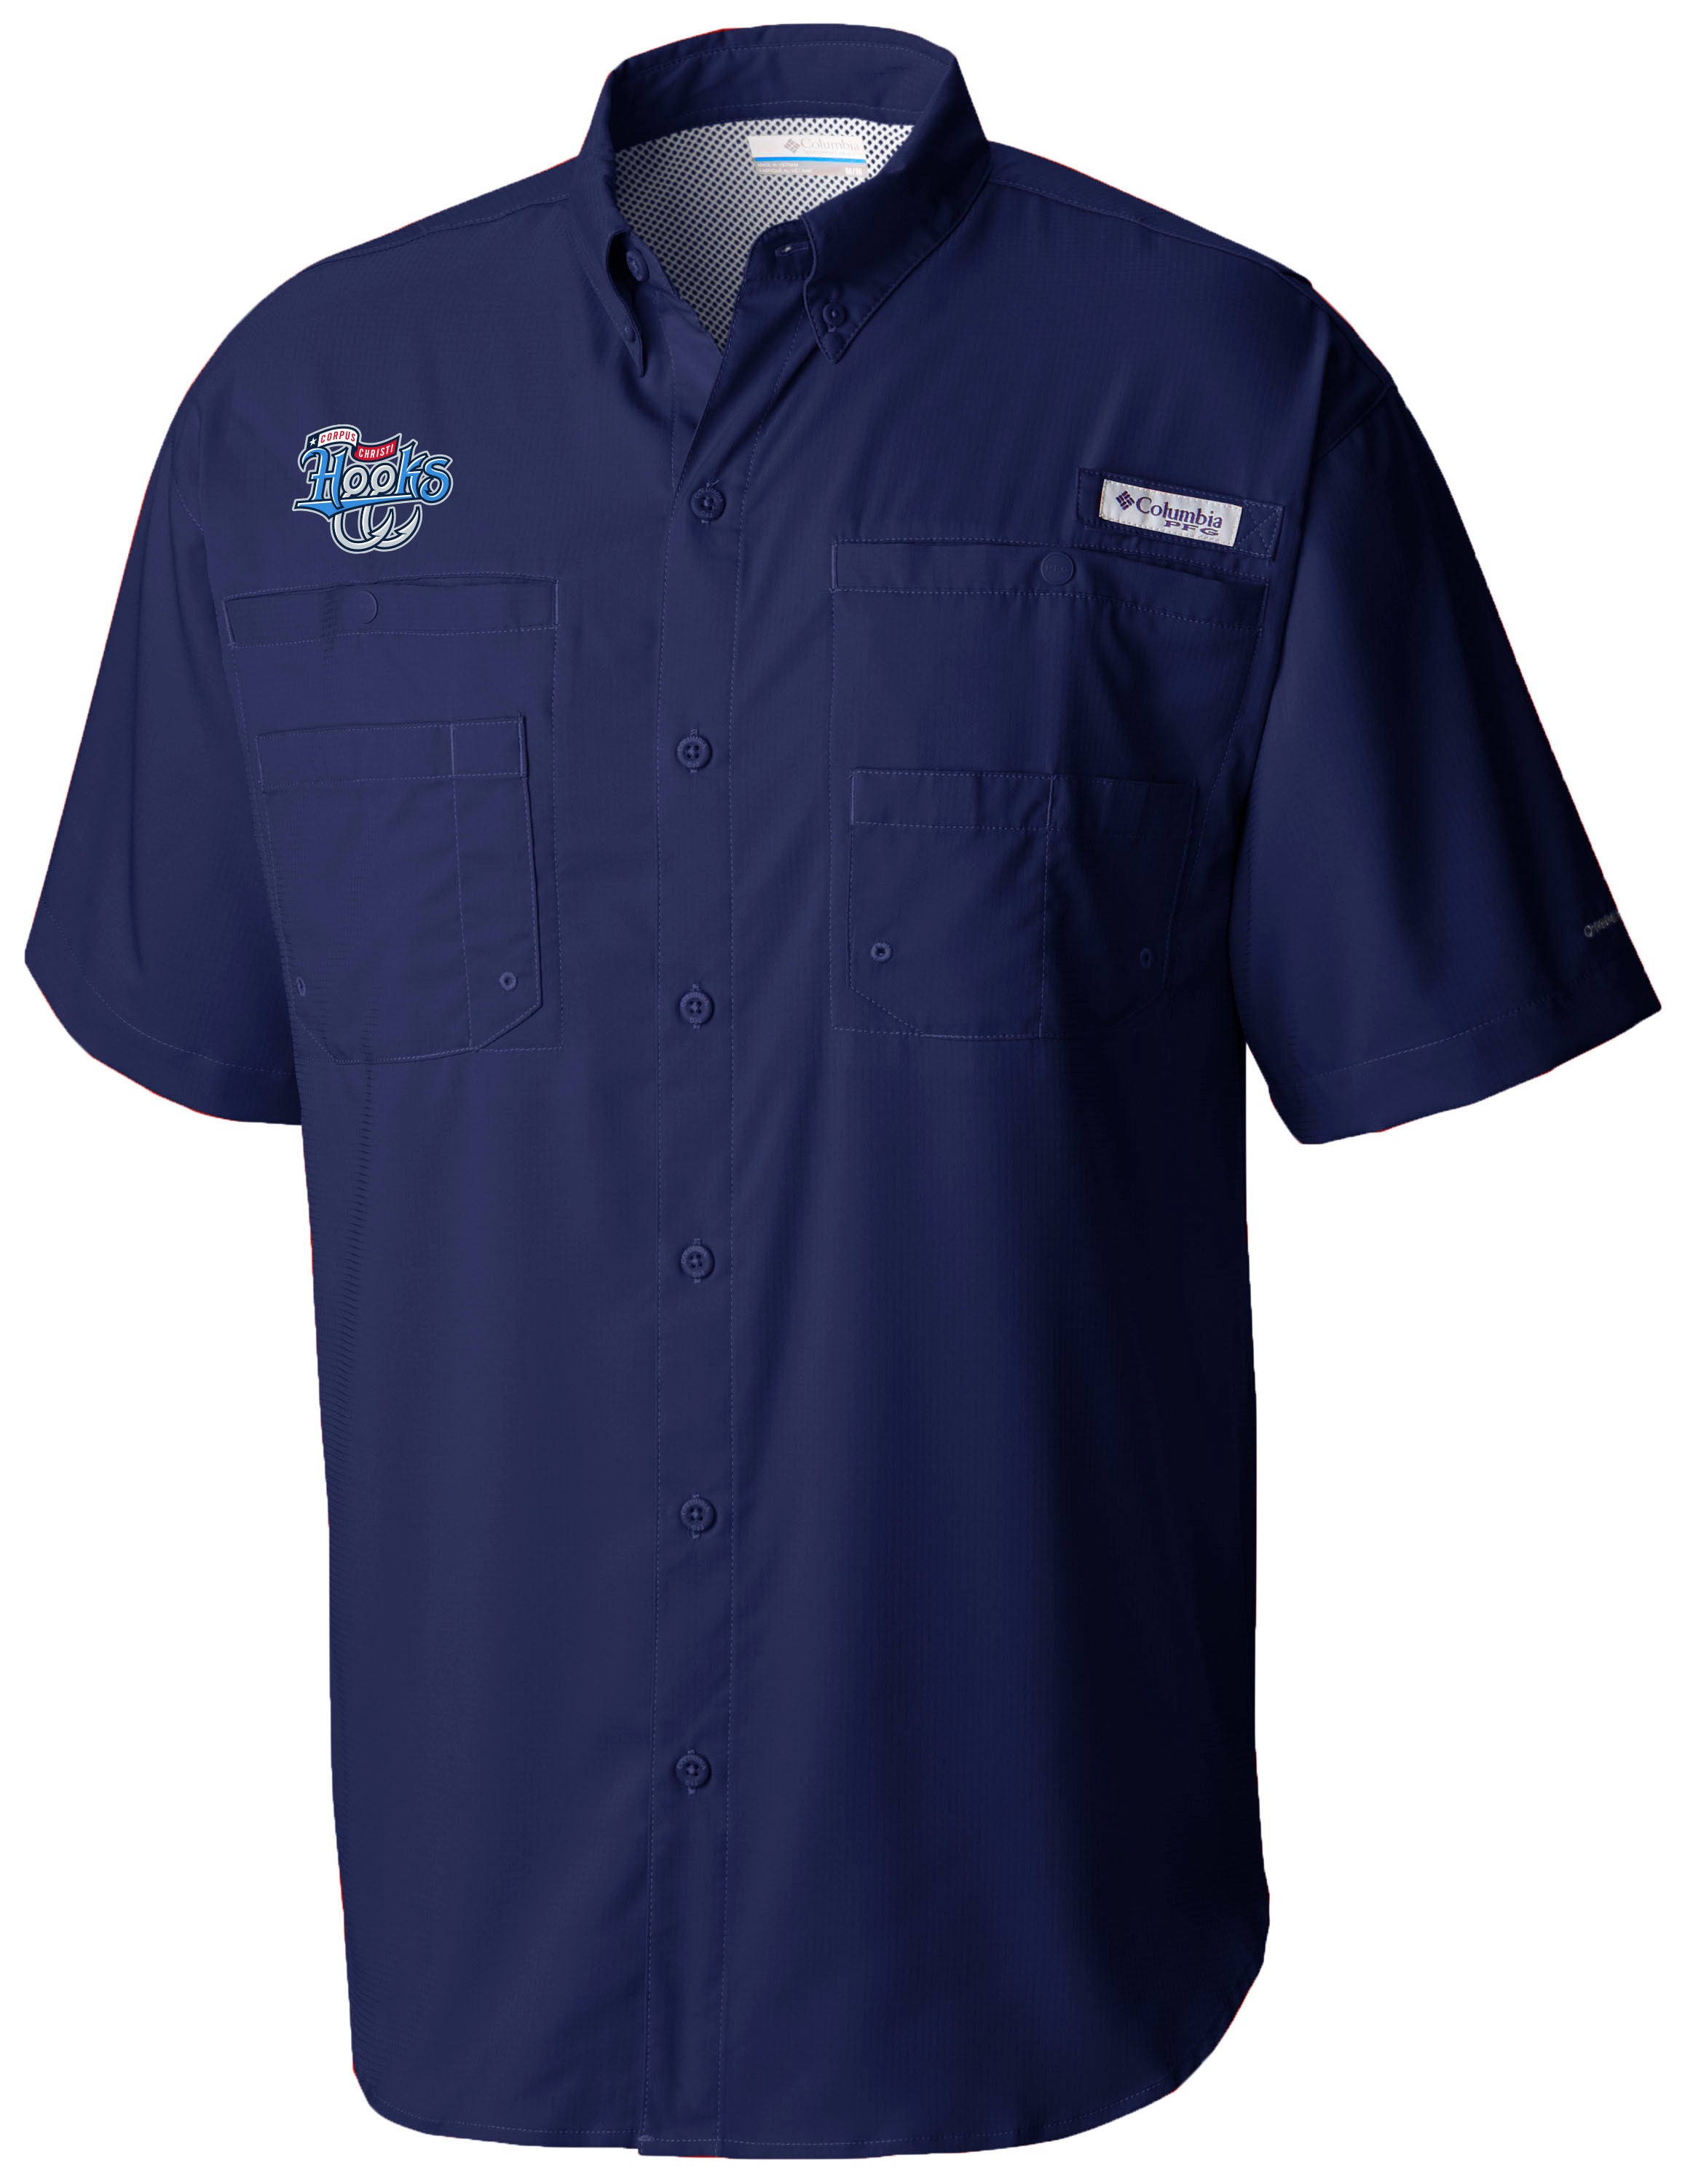 Columbia Sportswear - Fishing Shirt - Tamiami - Primary Logo - Navy Large